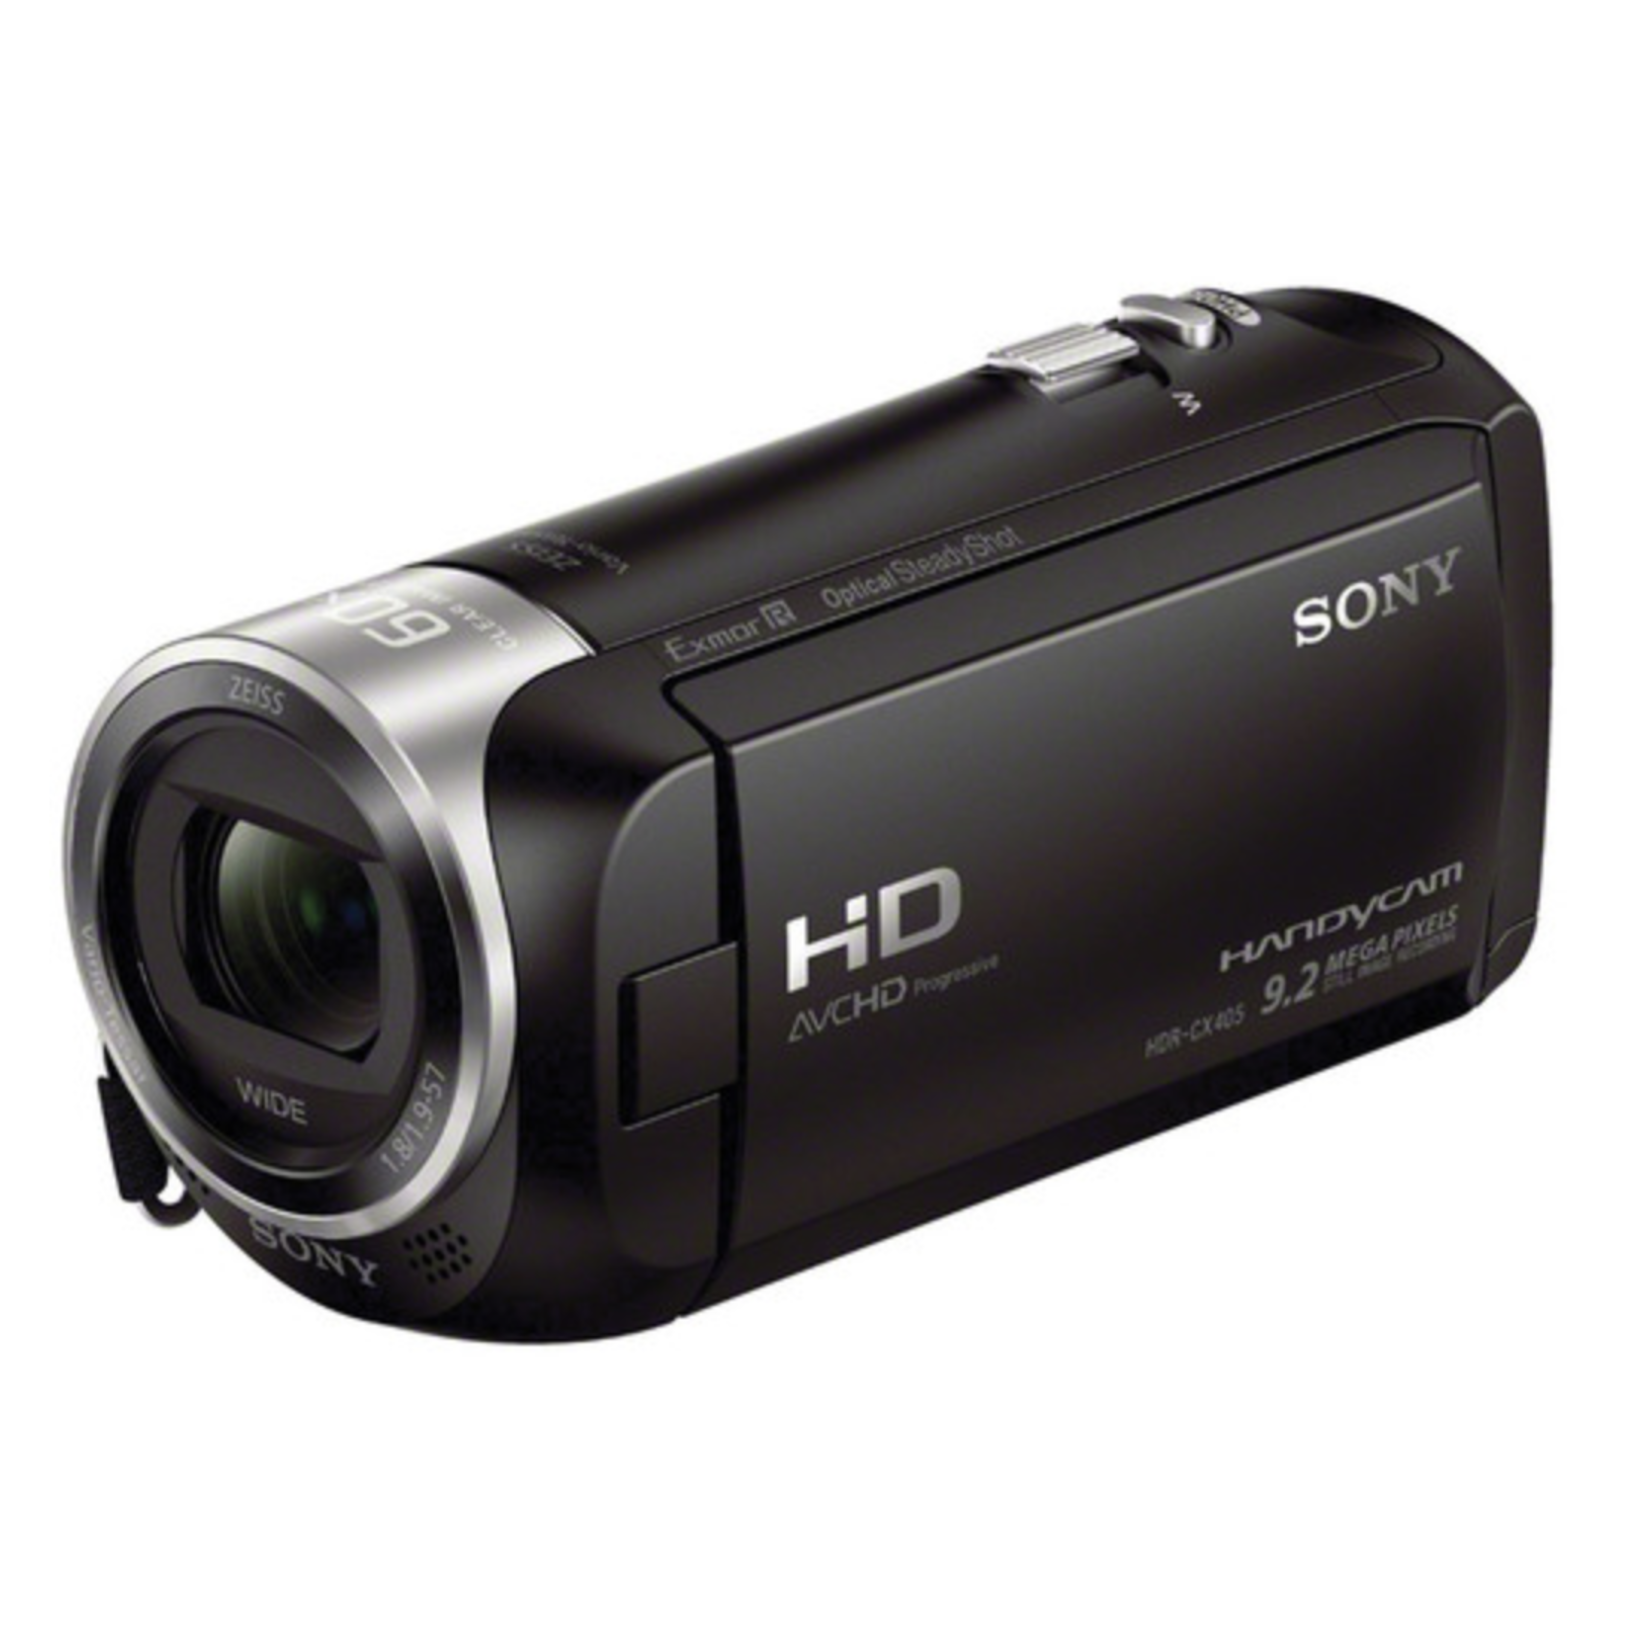 Sony Sony HDR-CX405 HD Handycam Camcorder